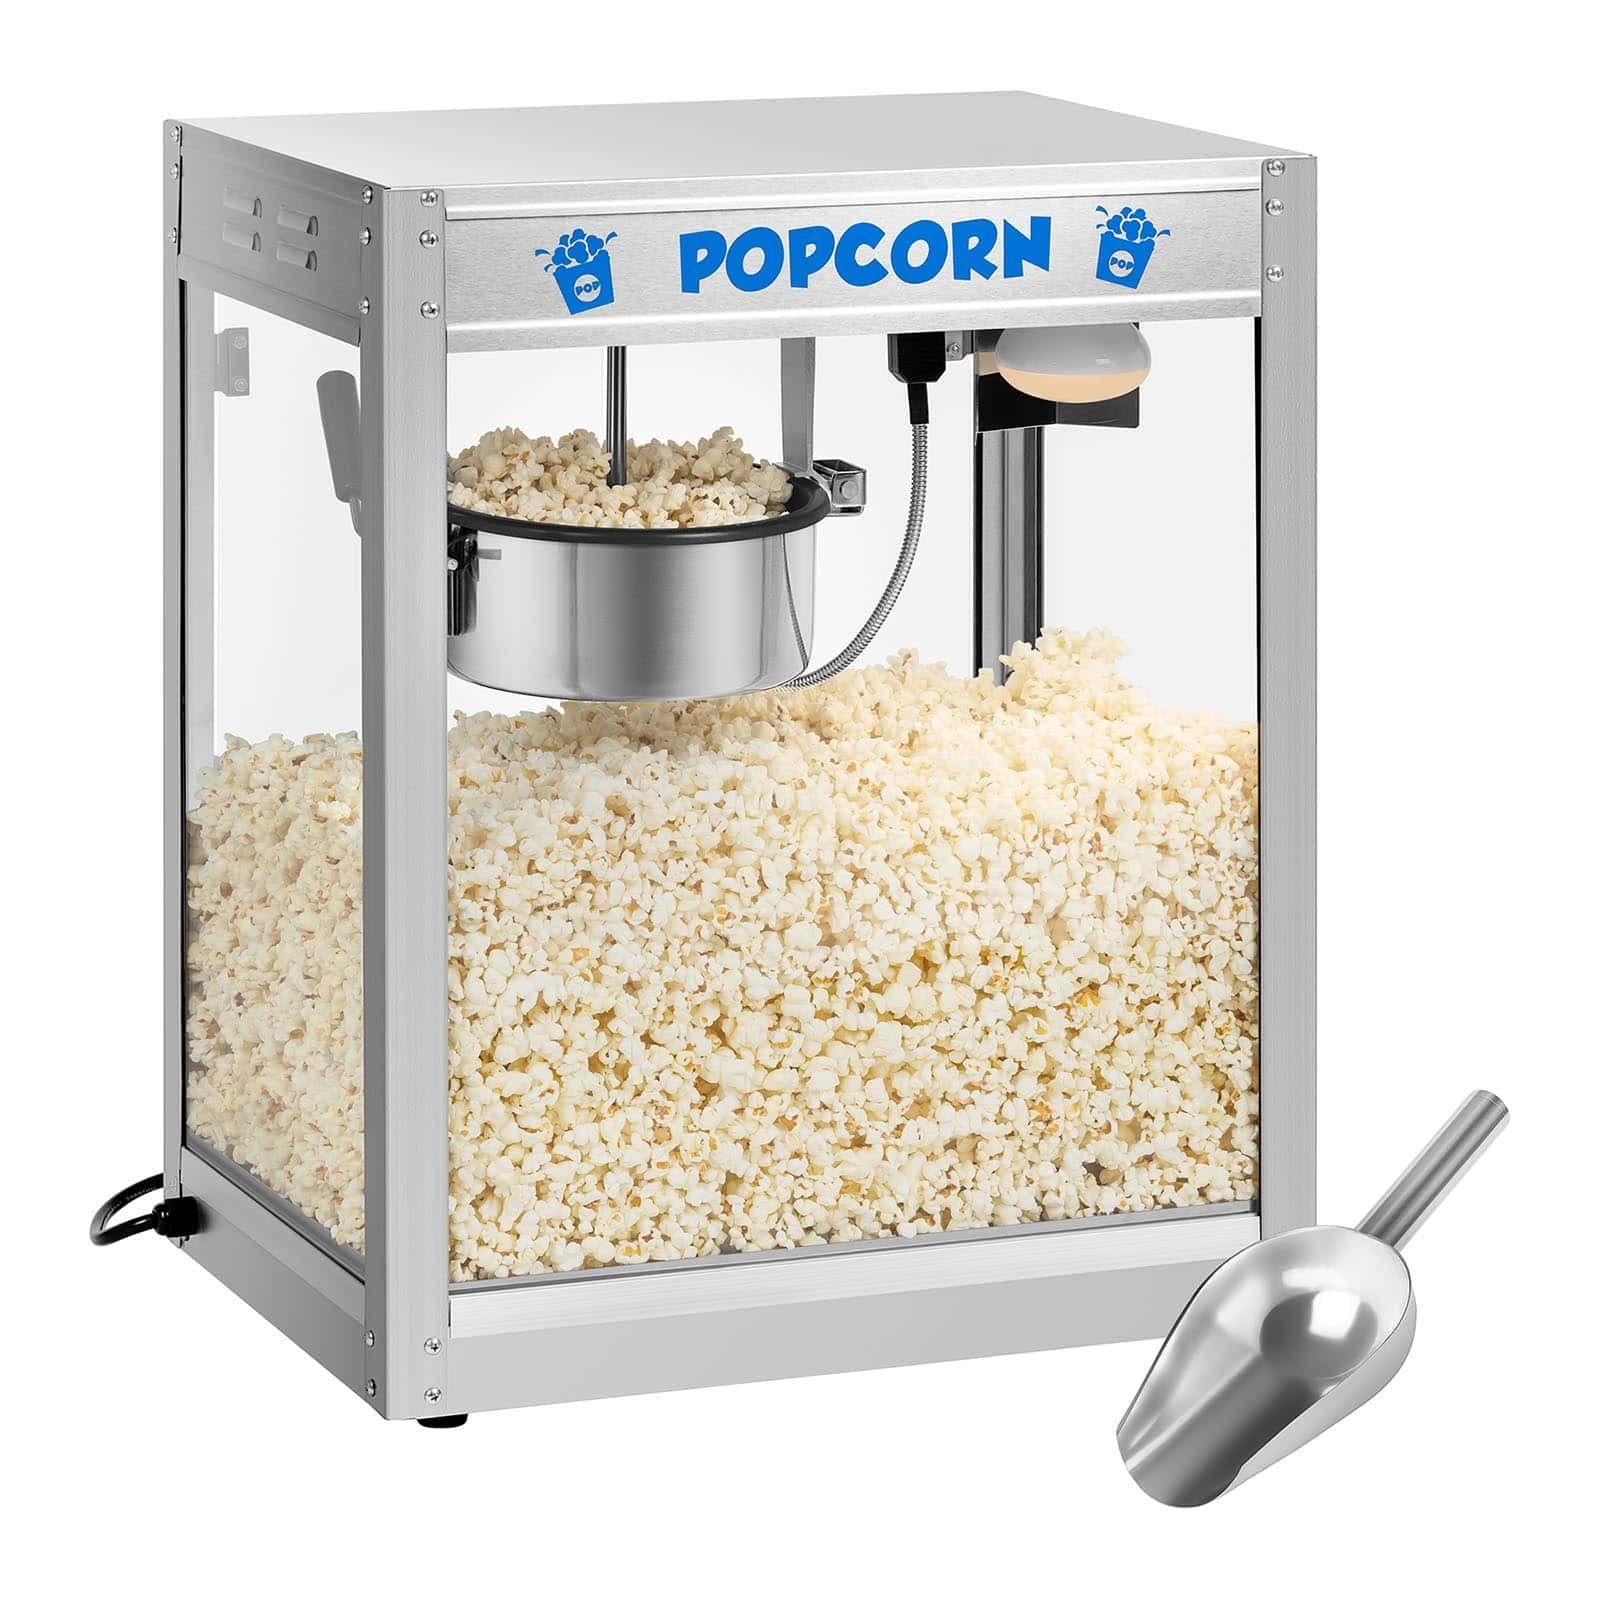 Royal Popcornmaschine Popcornmaschine Popcornautomat Popcornmaker Catering Popkornmaschine